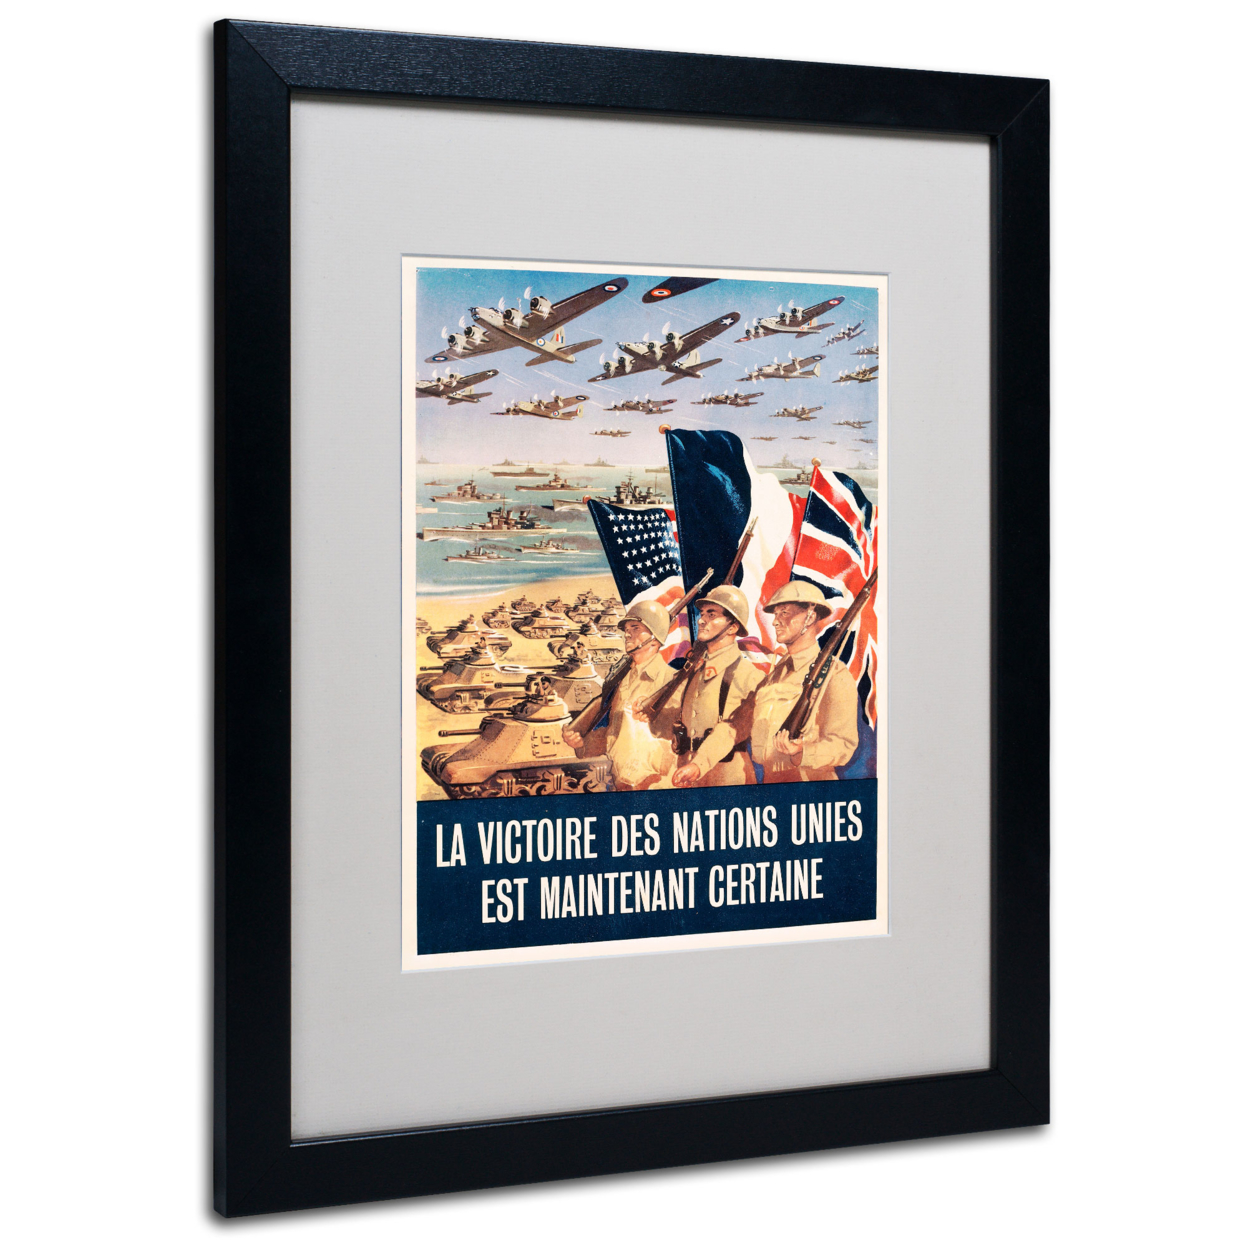 Propaganda Poster From World War II' Black Wooden Framed Art 18 X 22 Inches